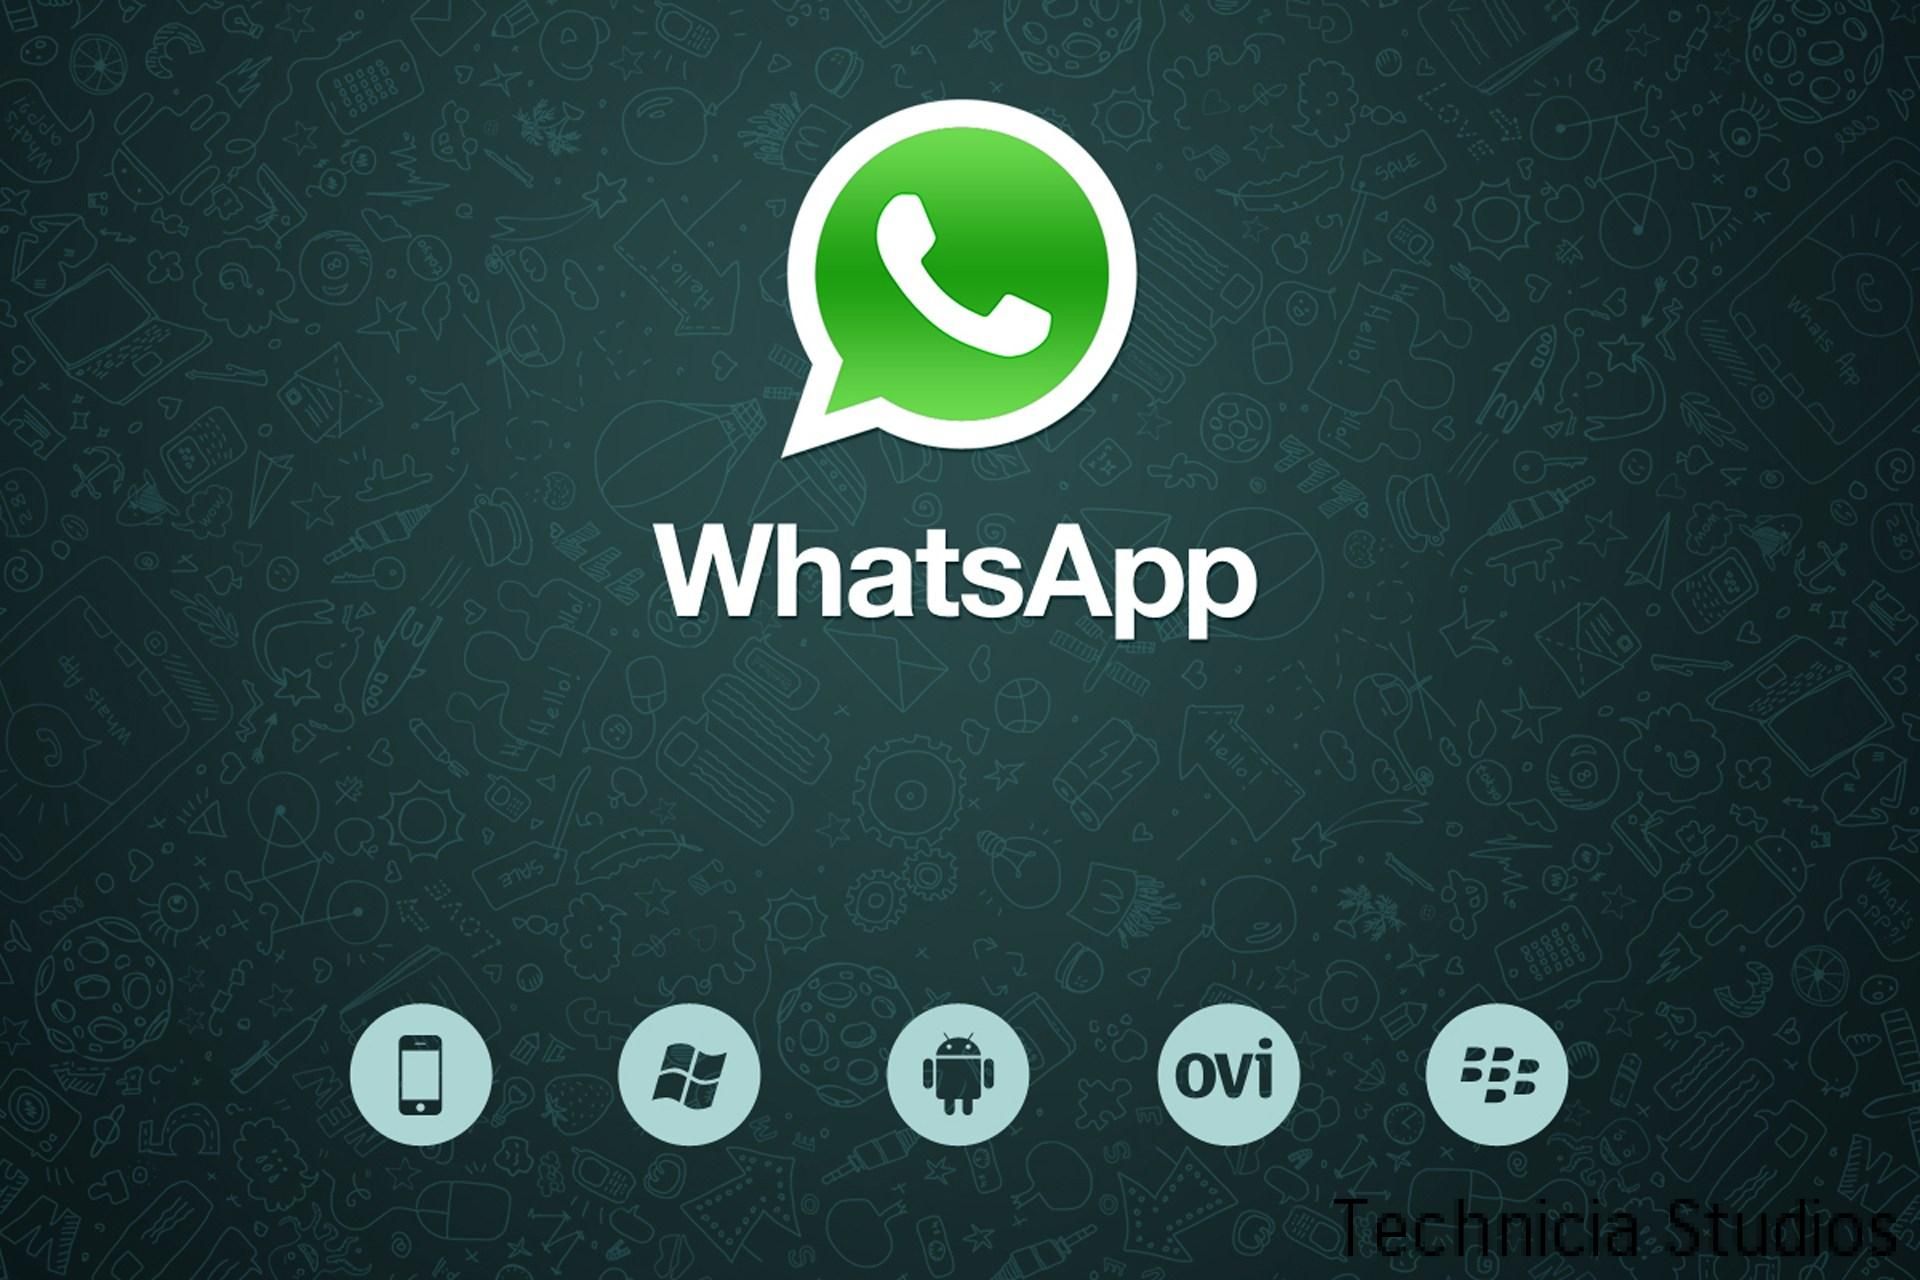 WhatsApp sfida Viber e Skype, farà anche telefonate